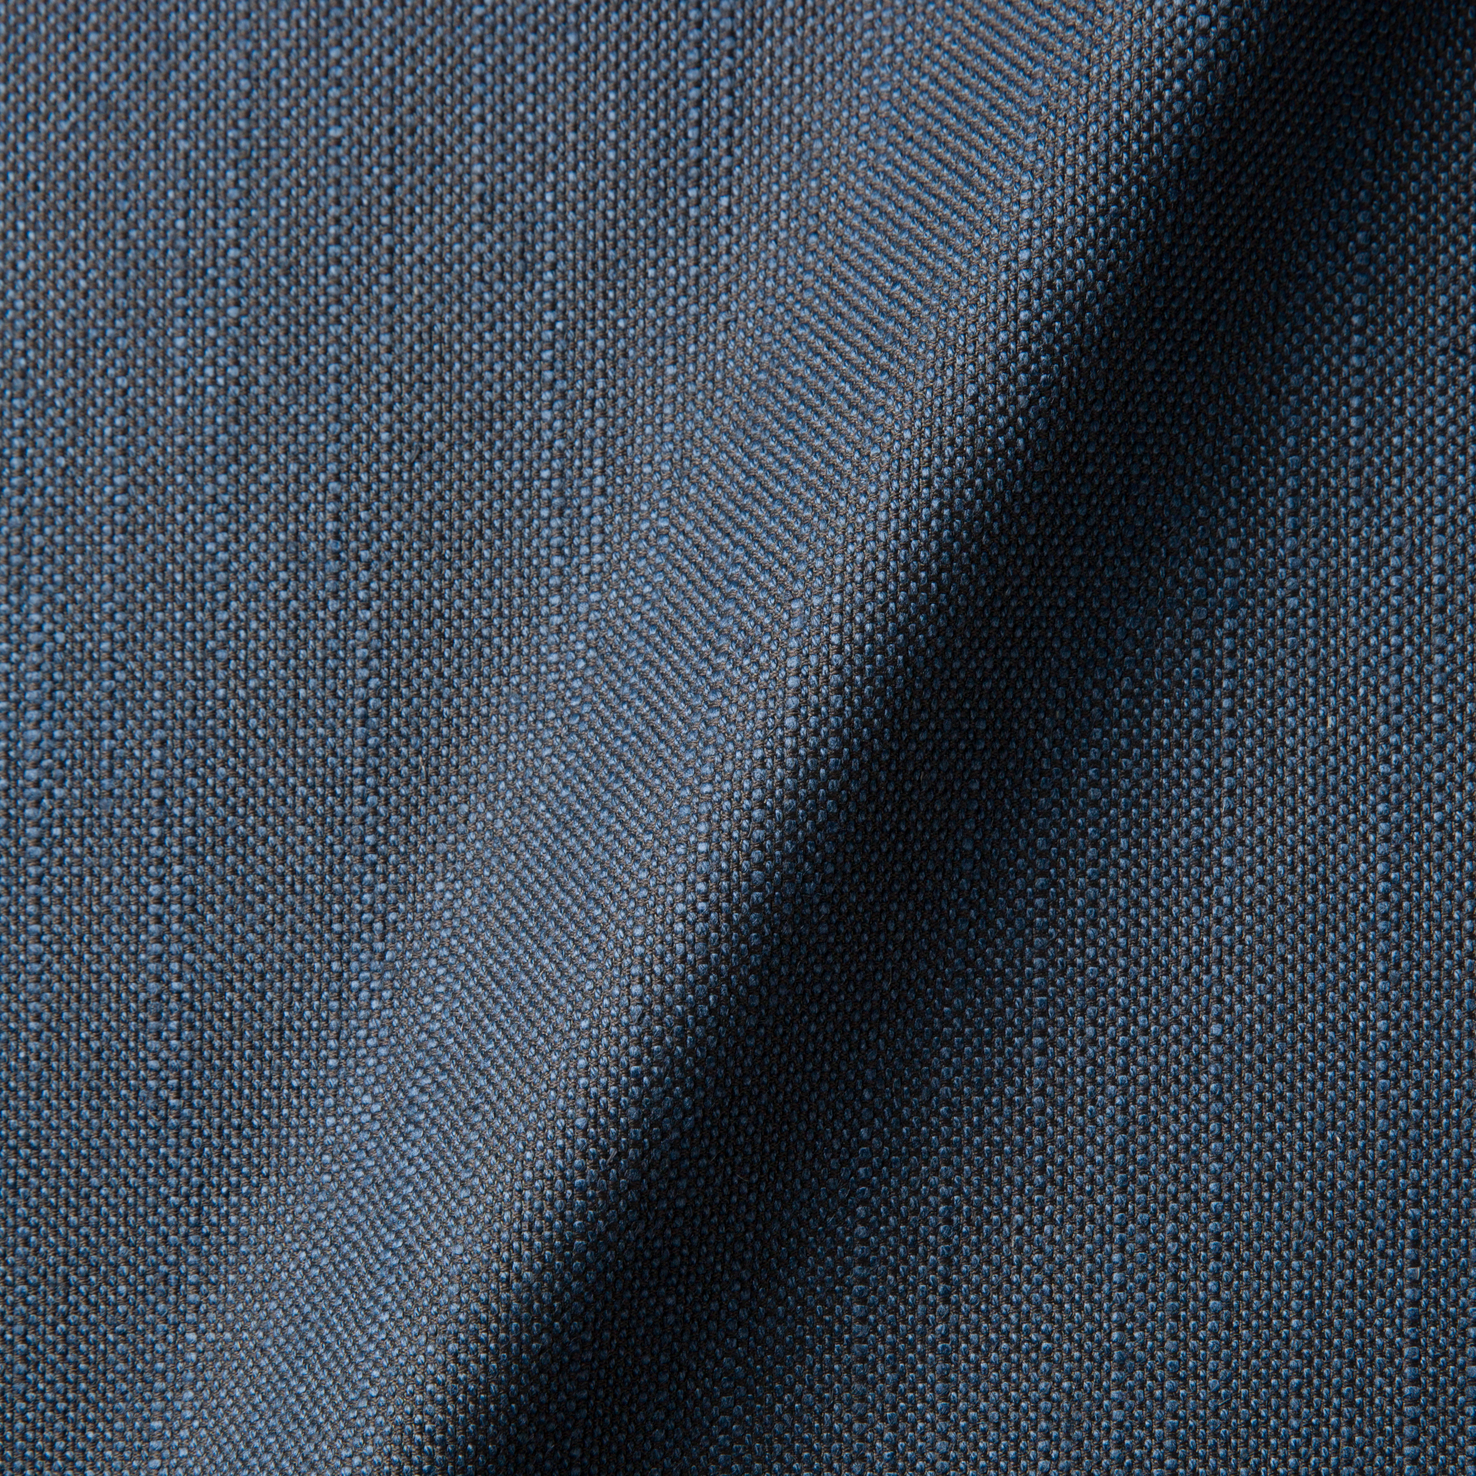 Fabric sample Macchedil Sottile Deep Blue